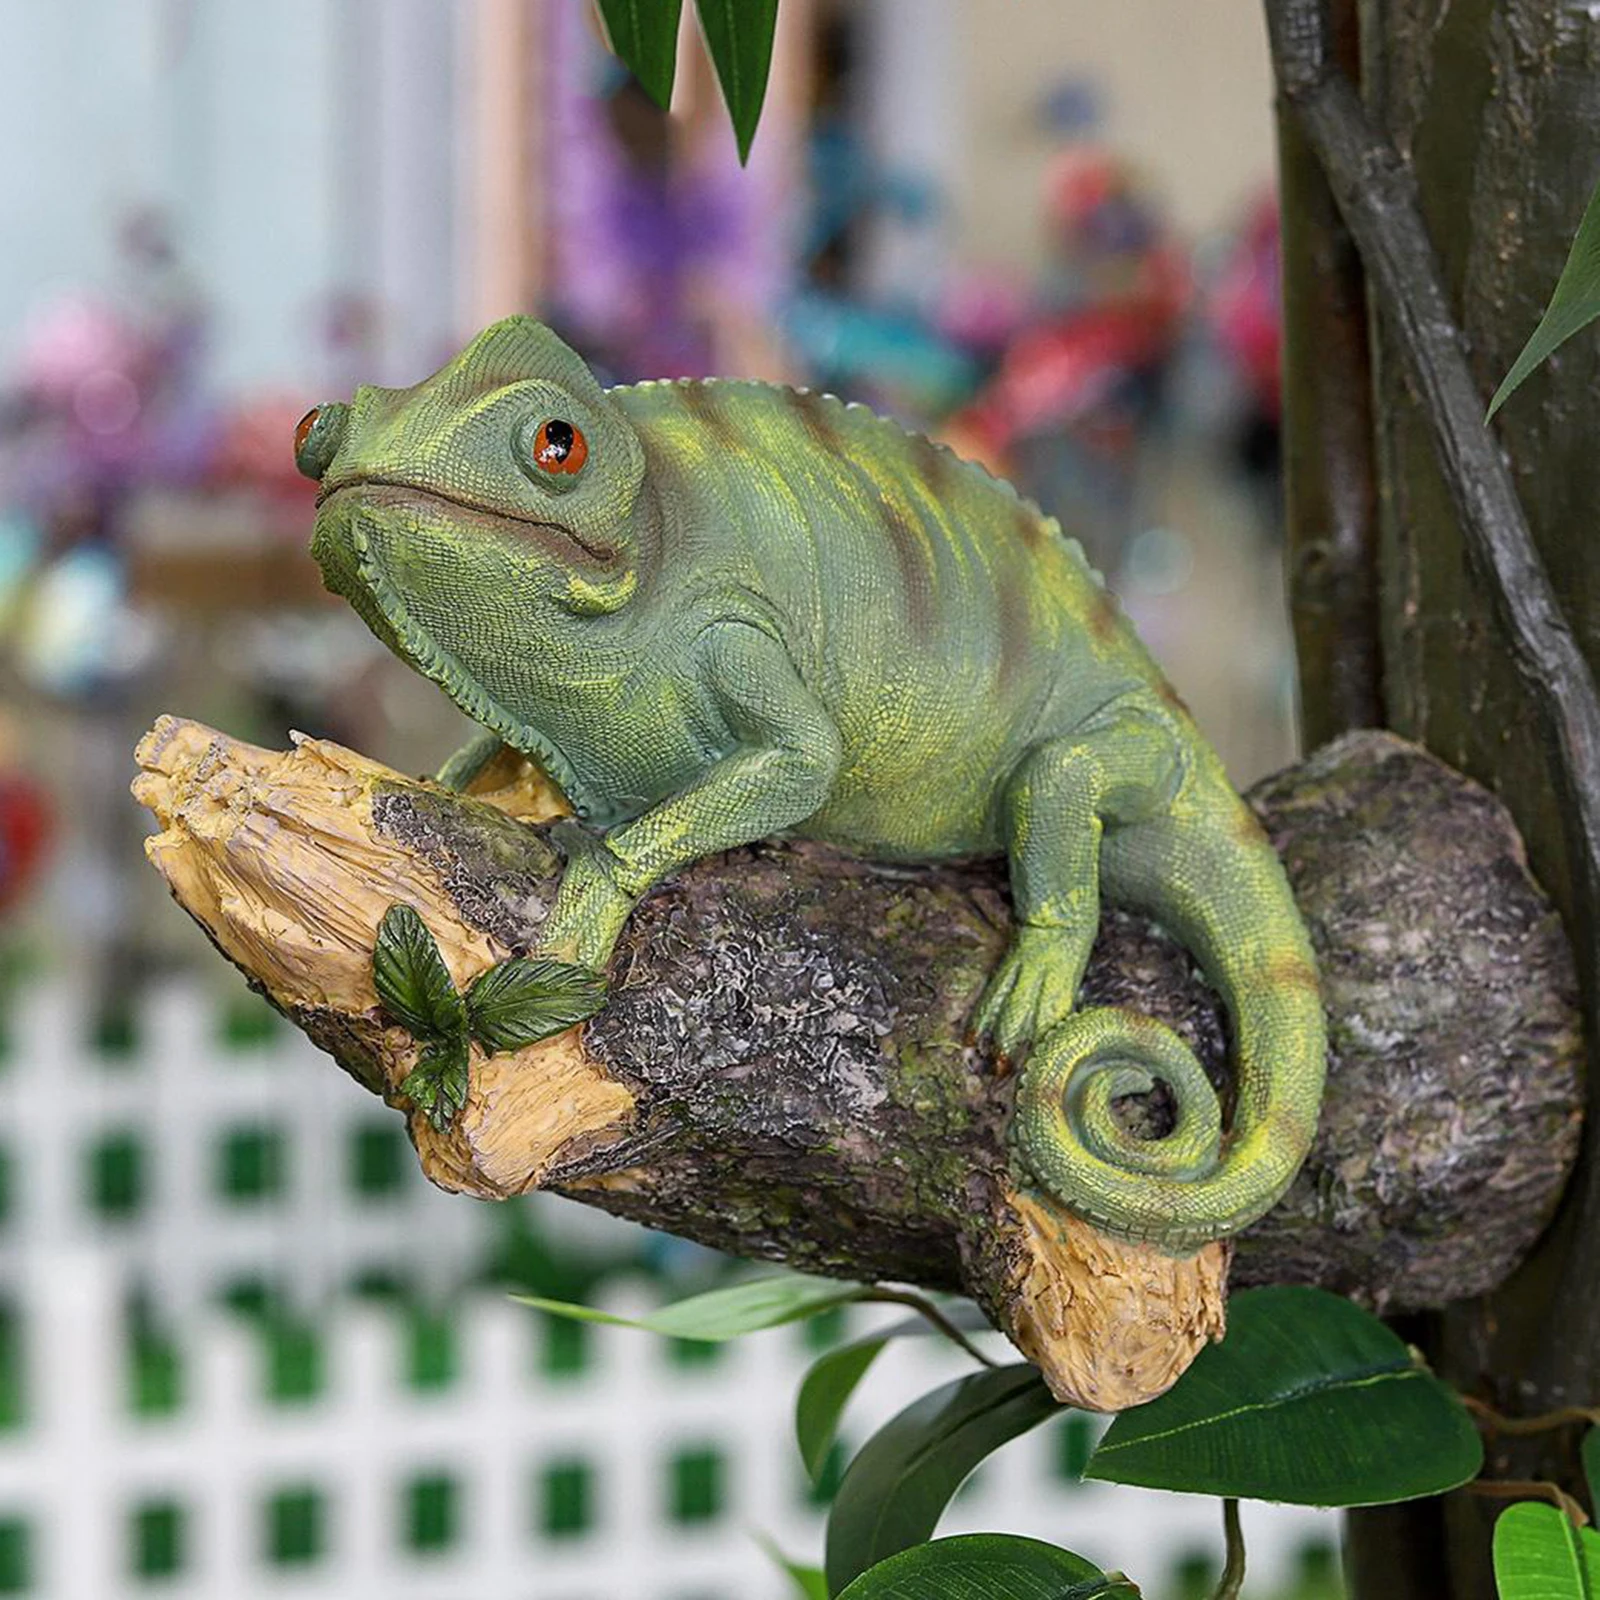 Realistic Chameleon Lizard Sculpture Resin Figurine Garden Decor Home Office Ornament Wall Hanging